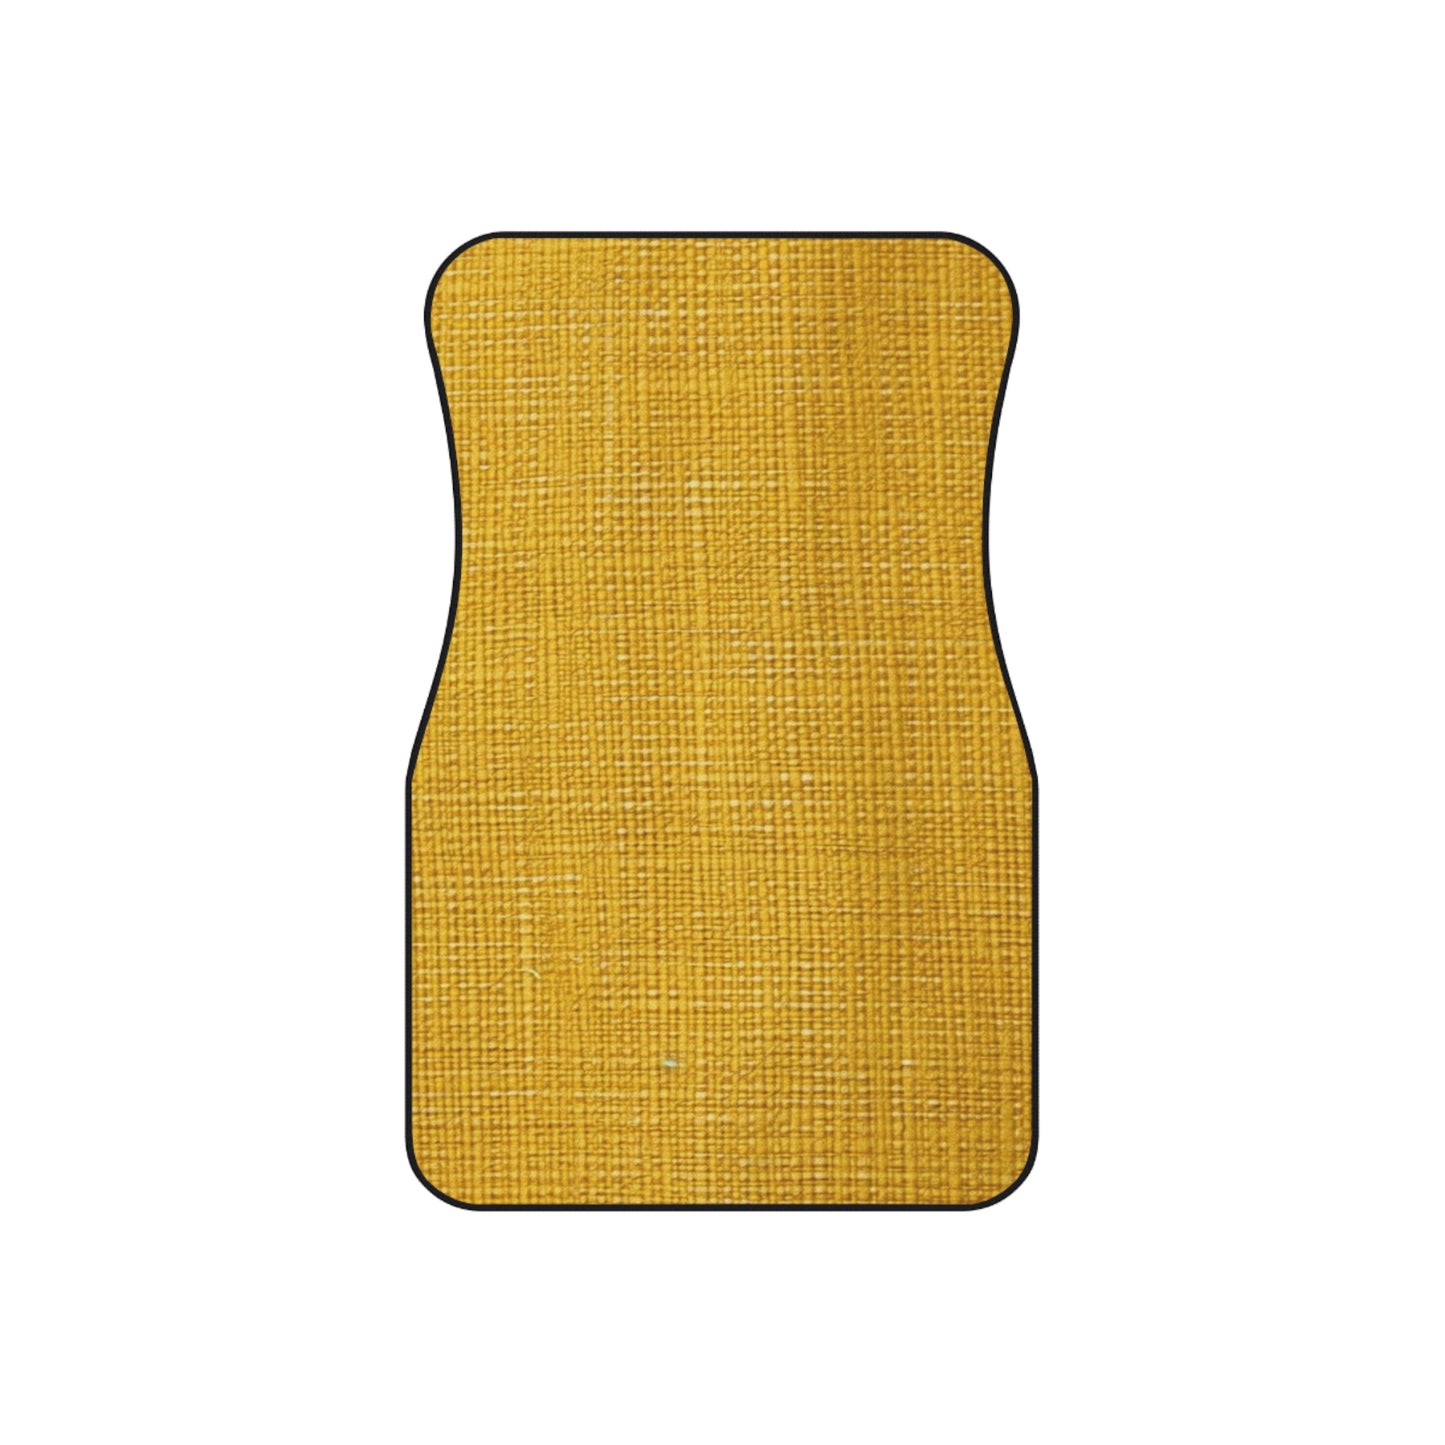 Radiant Sunny Yellow: Denim-Inspired Summer Fabric - Car Mats (Set of 4)